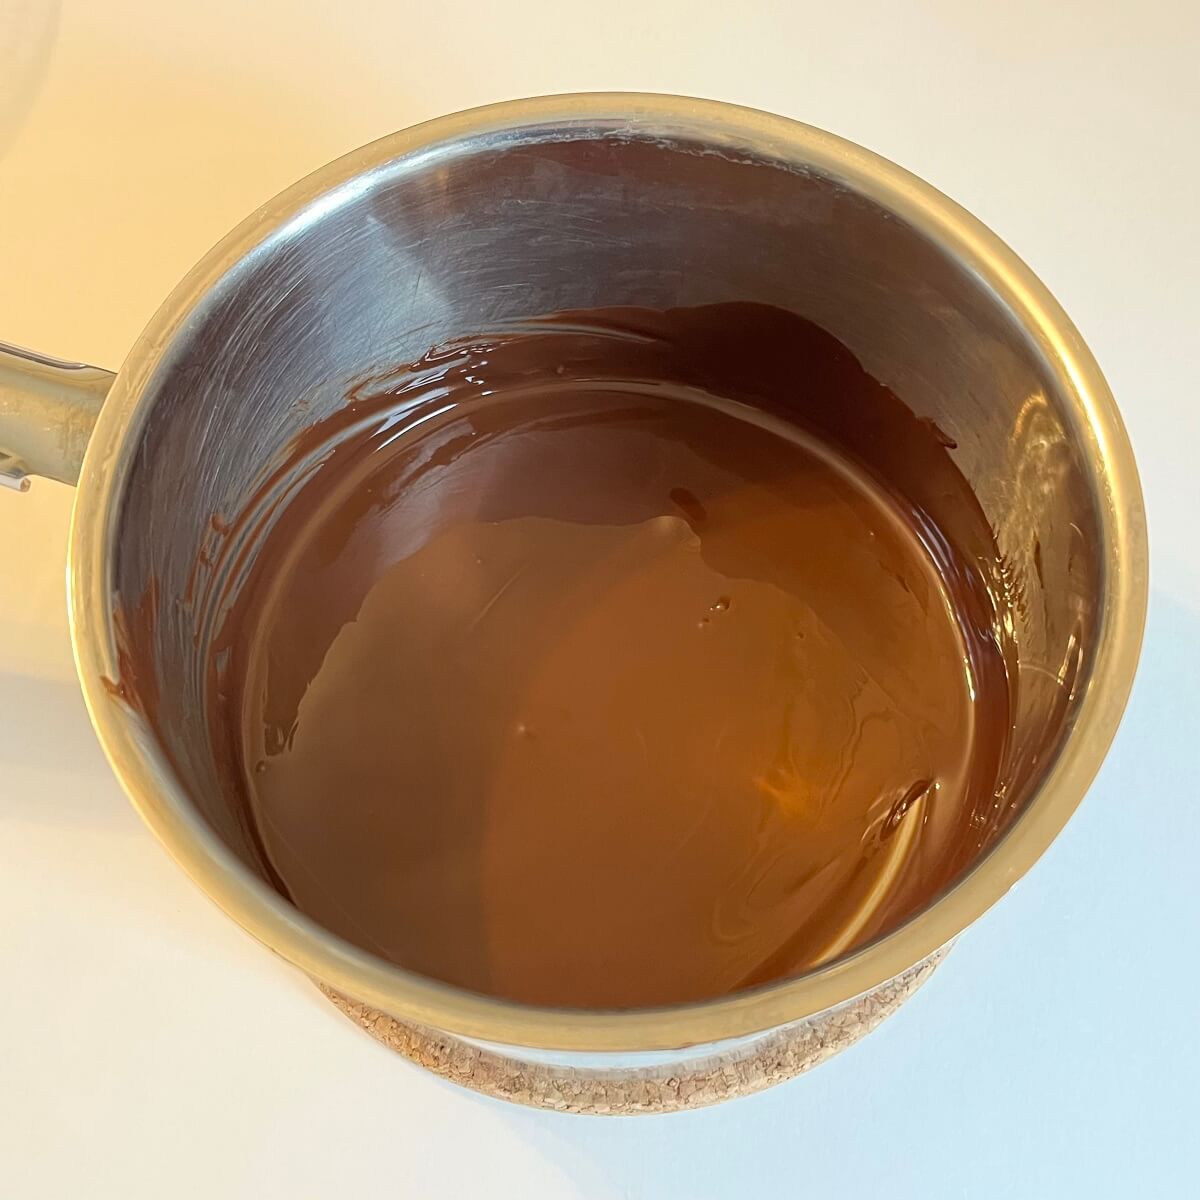 Melted warm dark chocolate in a steel pot.